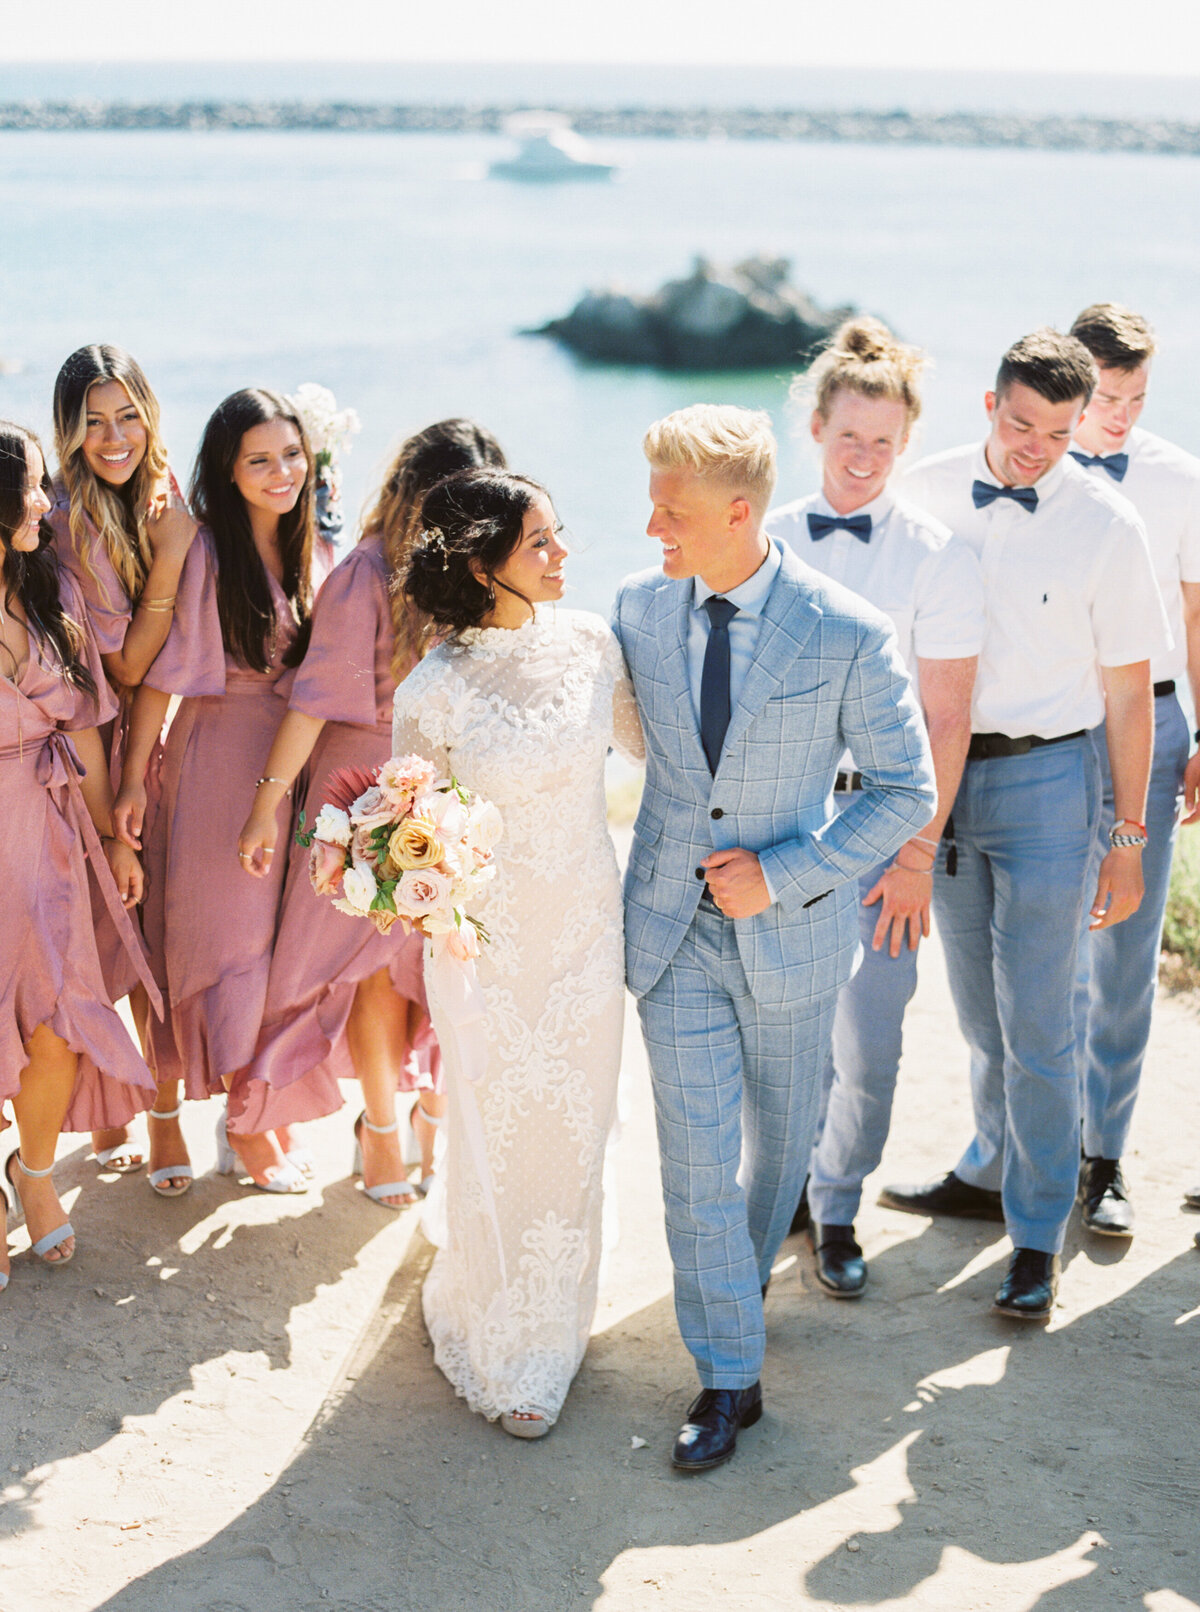 Jen & Zac | Newport Beach, California | Mary Claire Photography | Arizona & Destination Fine Art Wedding Photographer